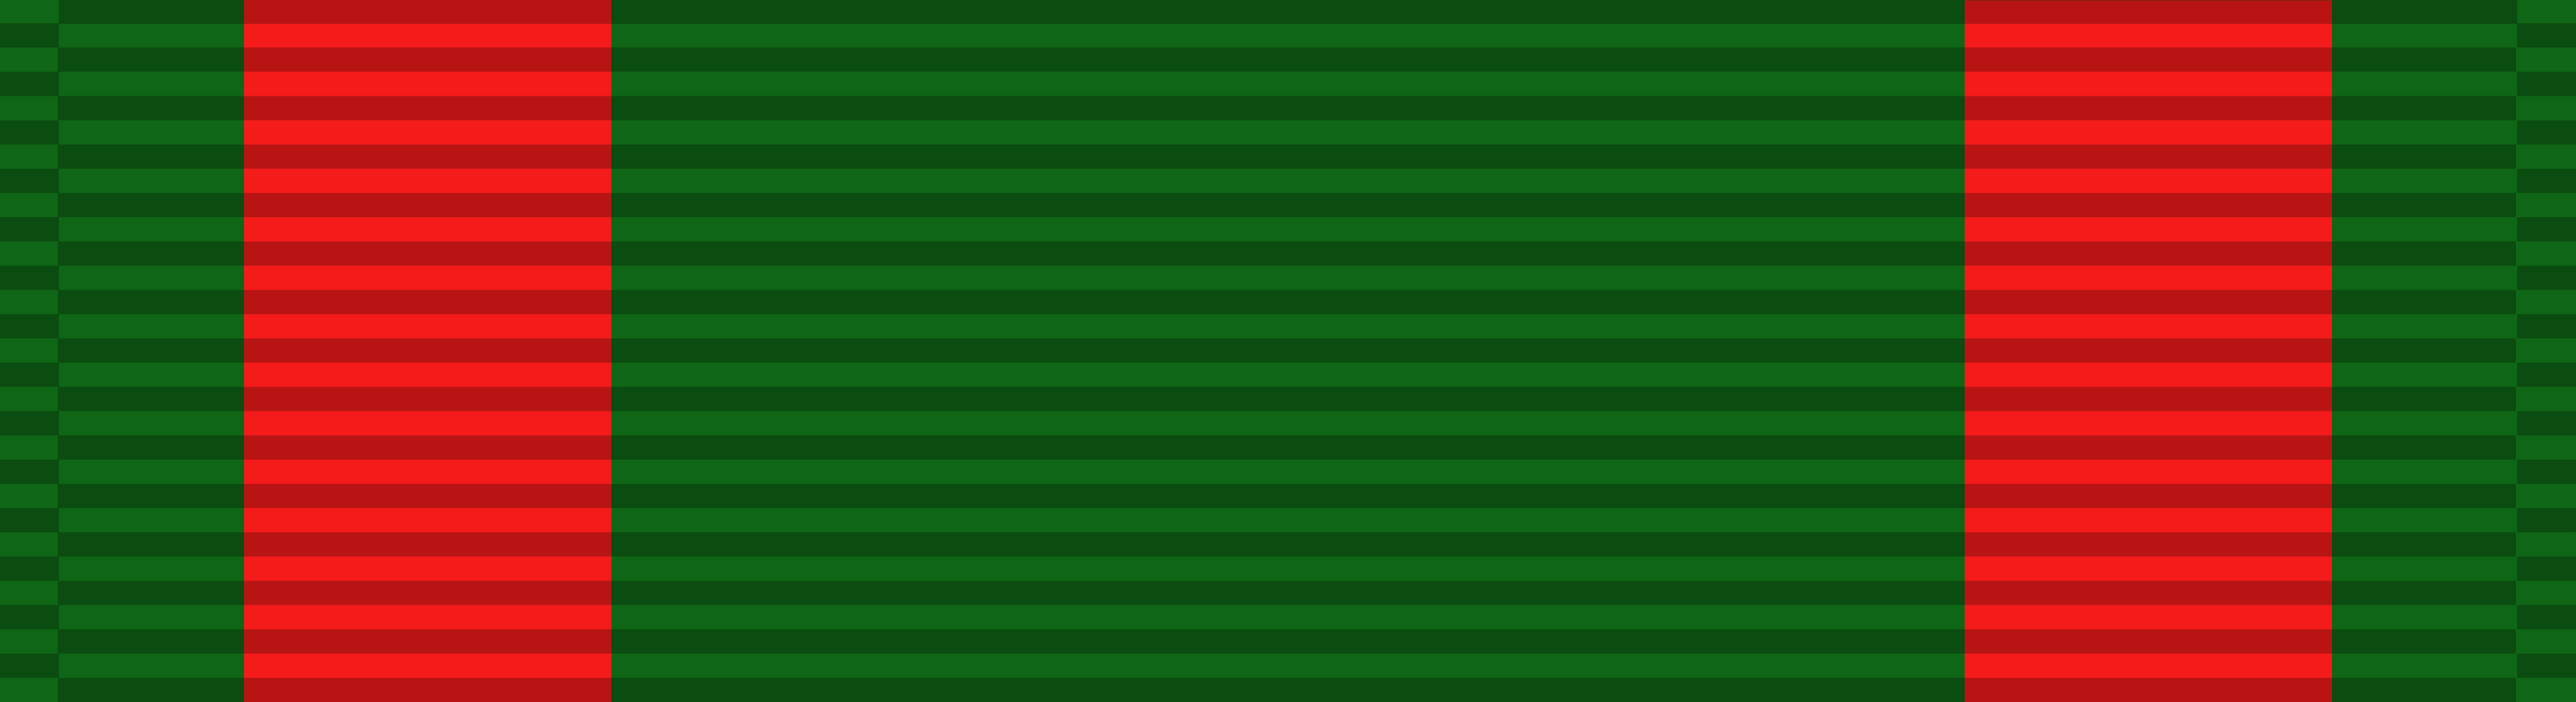 Vietnam Civil Actions Medal 2